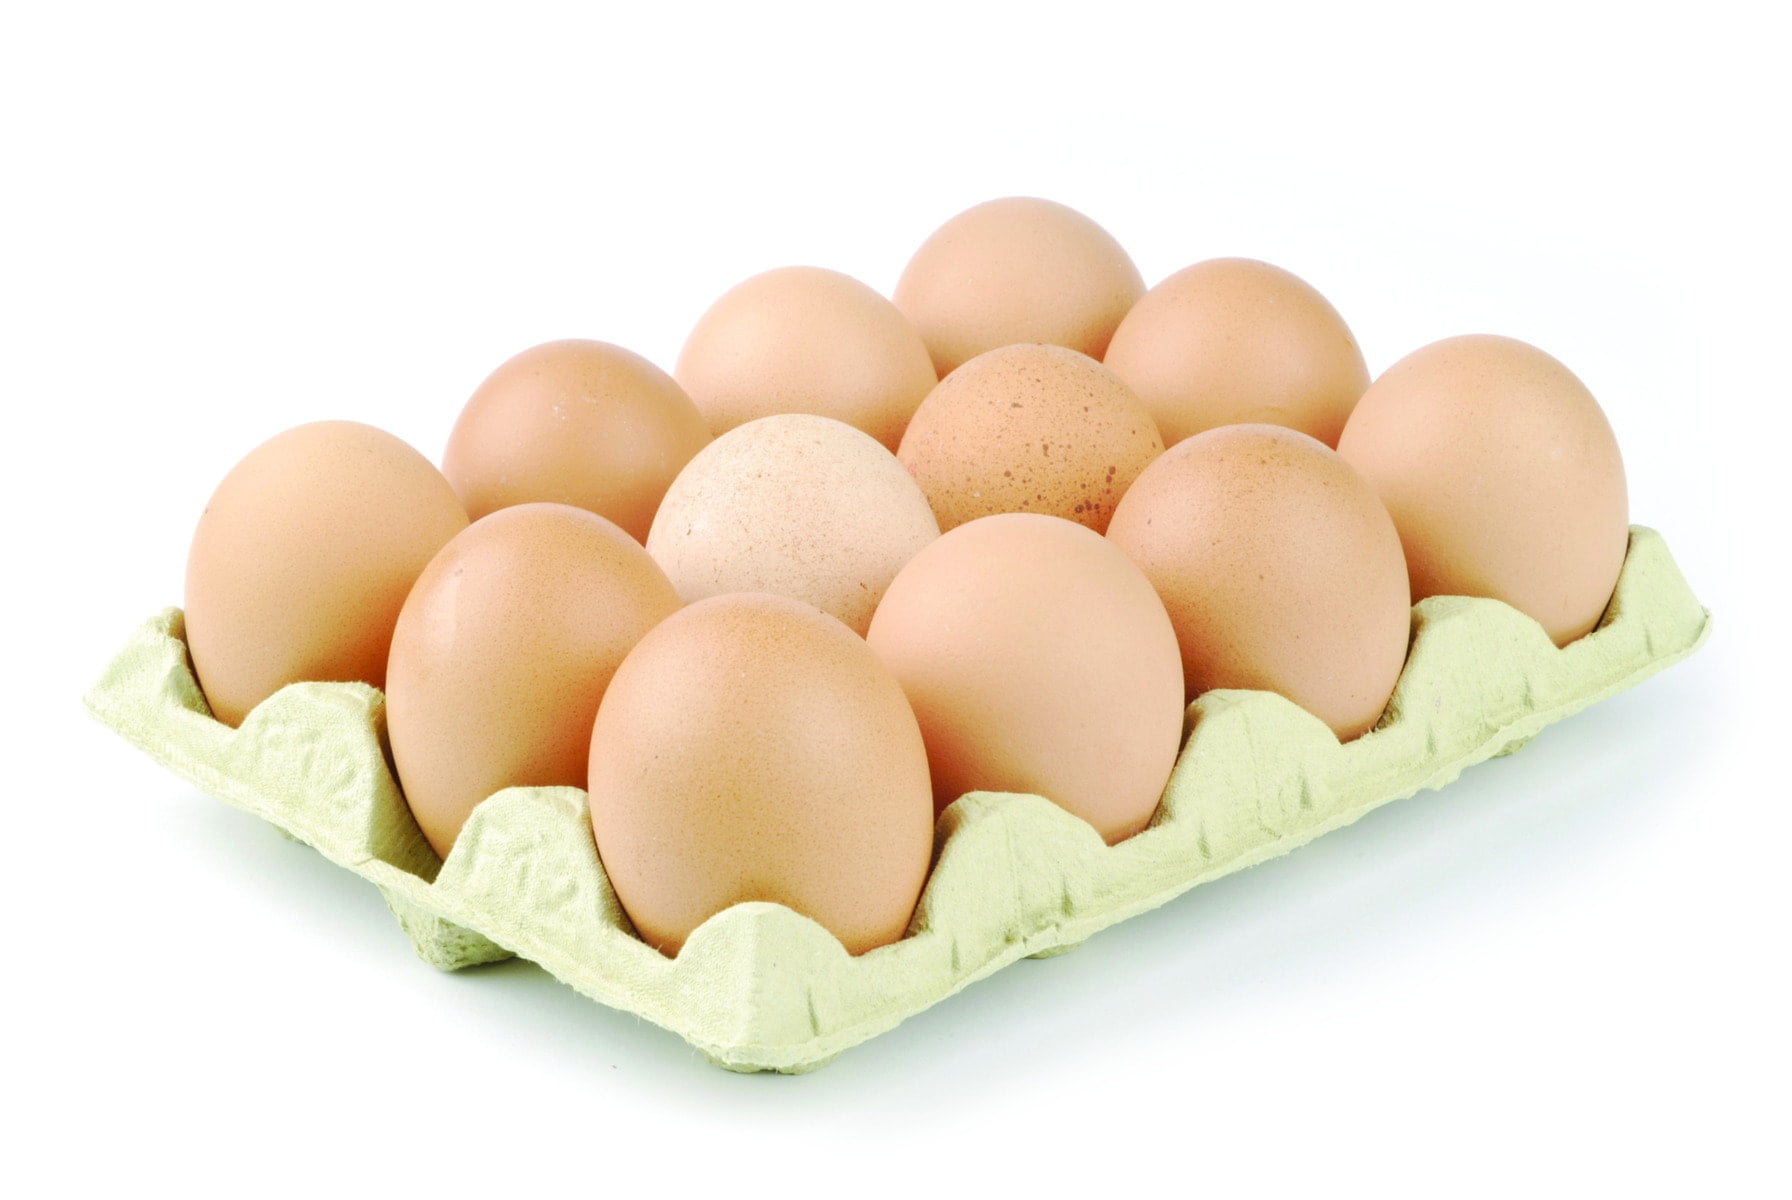 12 ways with eggs